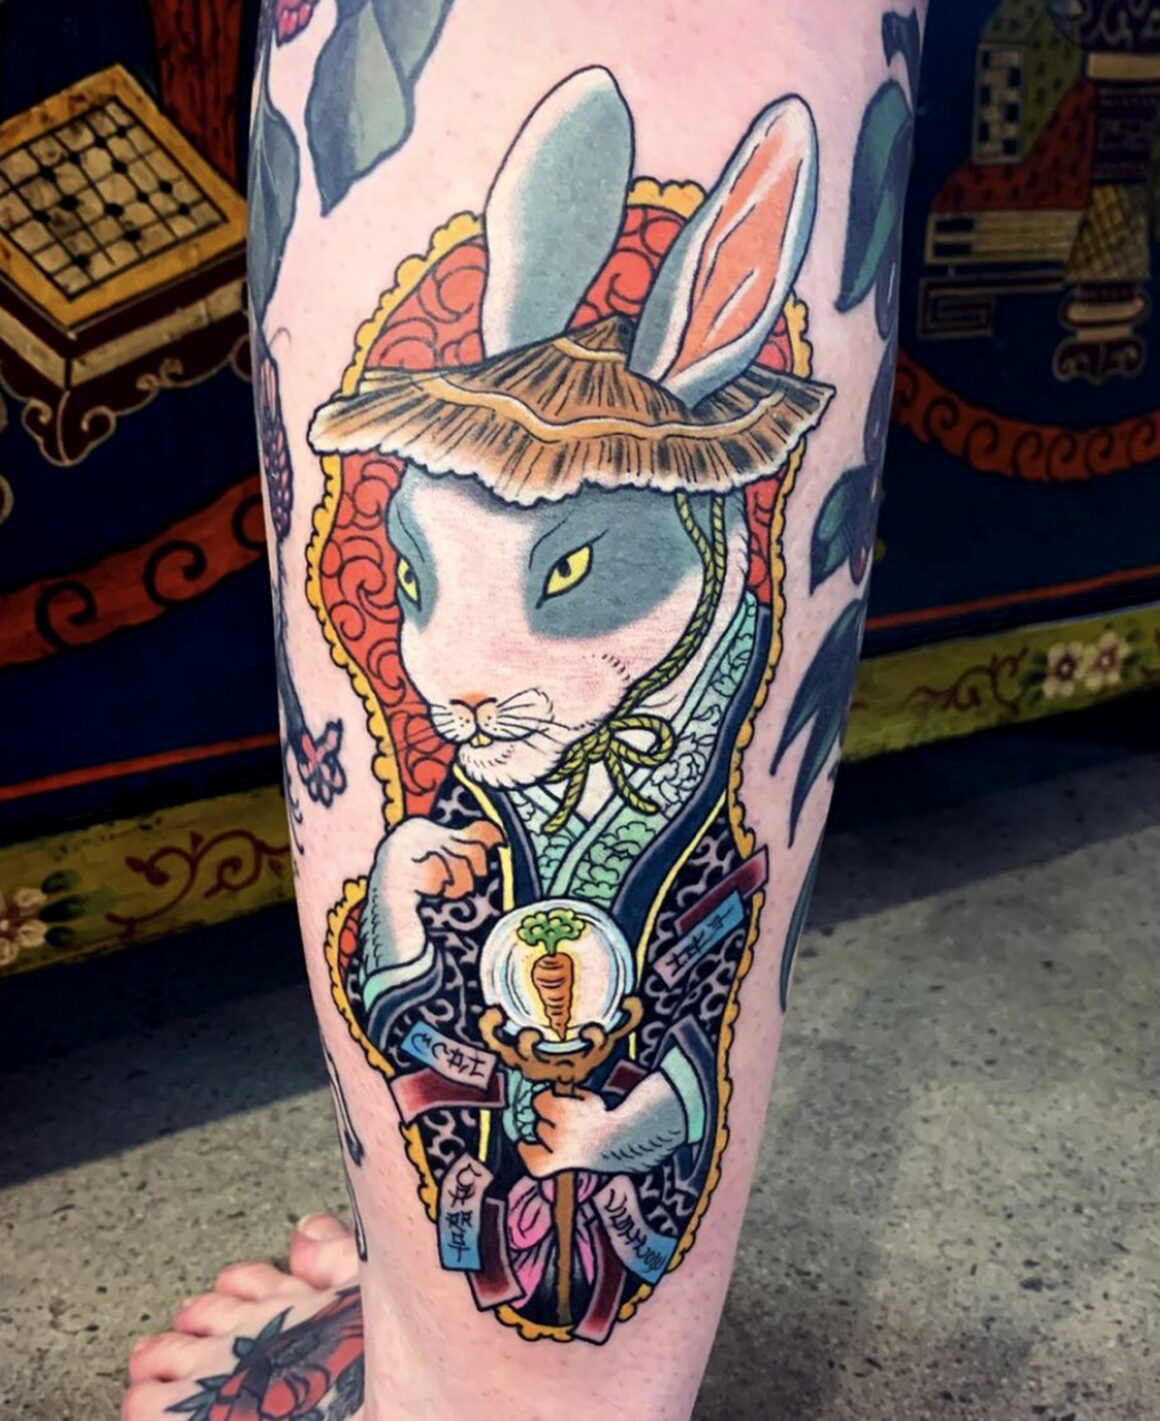 Tattoo uploaded by Tattoodo • Bunny tattoo by Donghwa tattoo #Donghwa # bunnytattoo #linework #minimal #small #tiny #realistic #illustrative  #fineline #bunny #rabbit #animal #nature #cute • Tattoodo